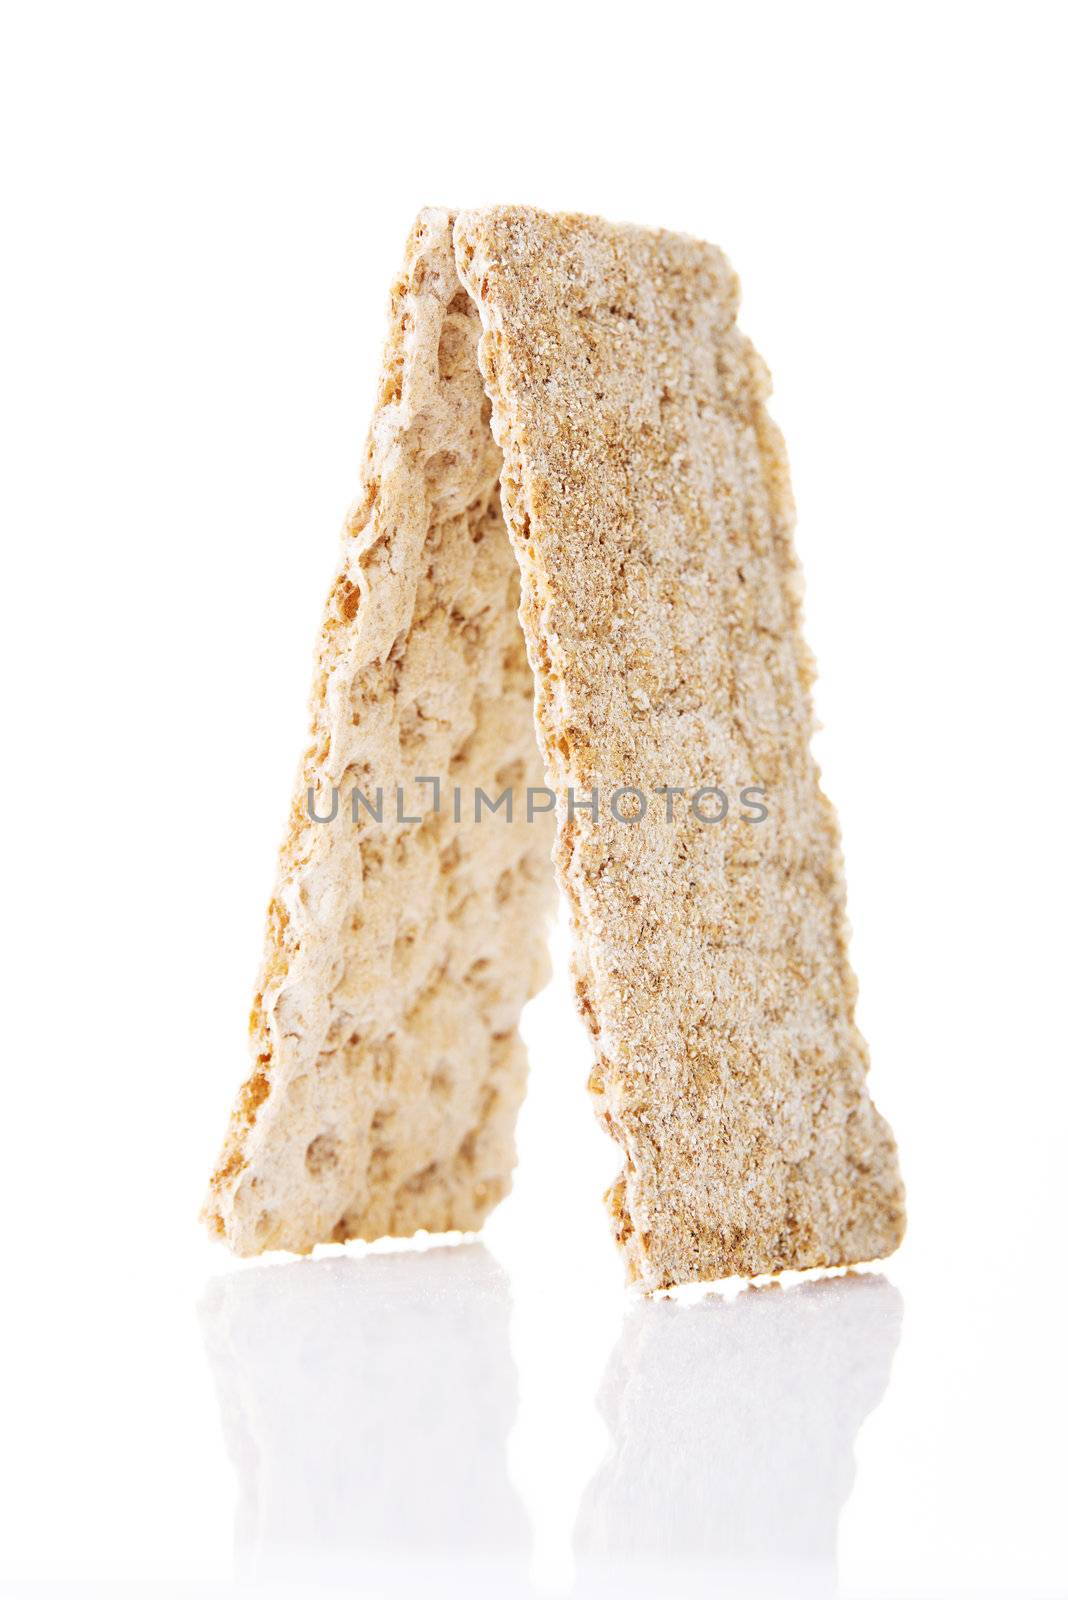 Healthy rye cracker bread for diet